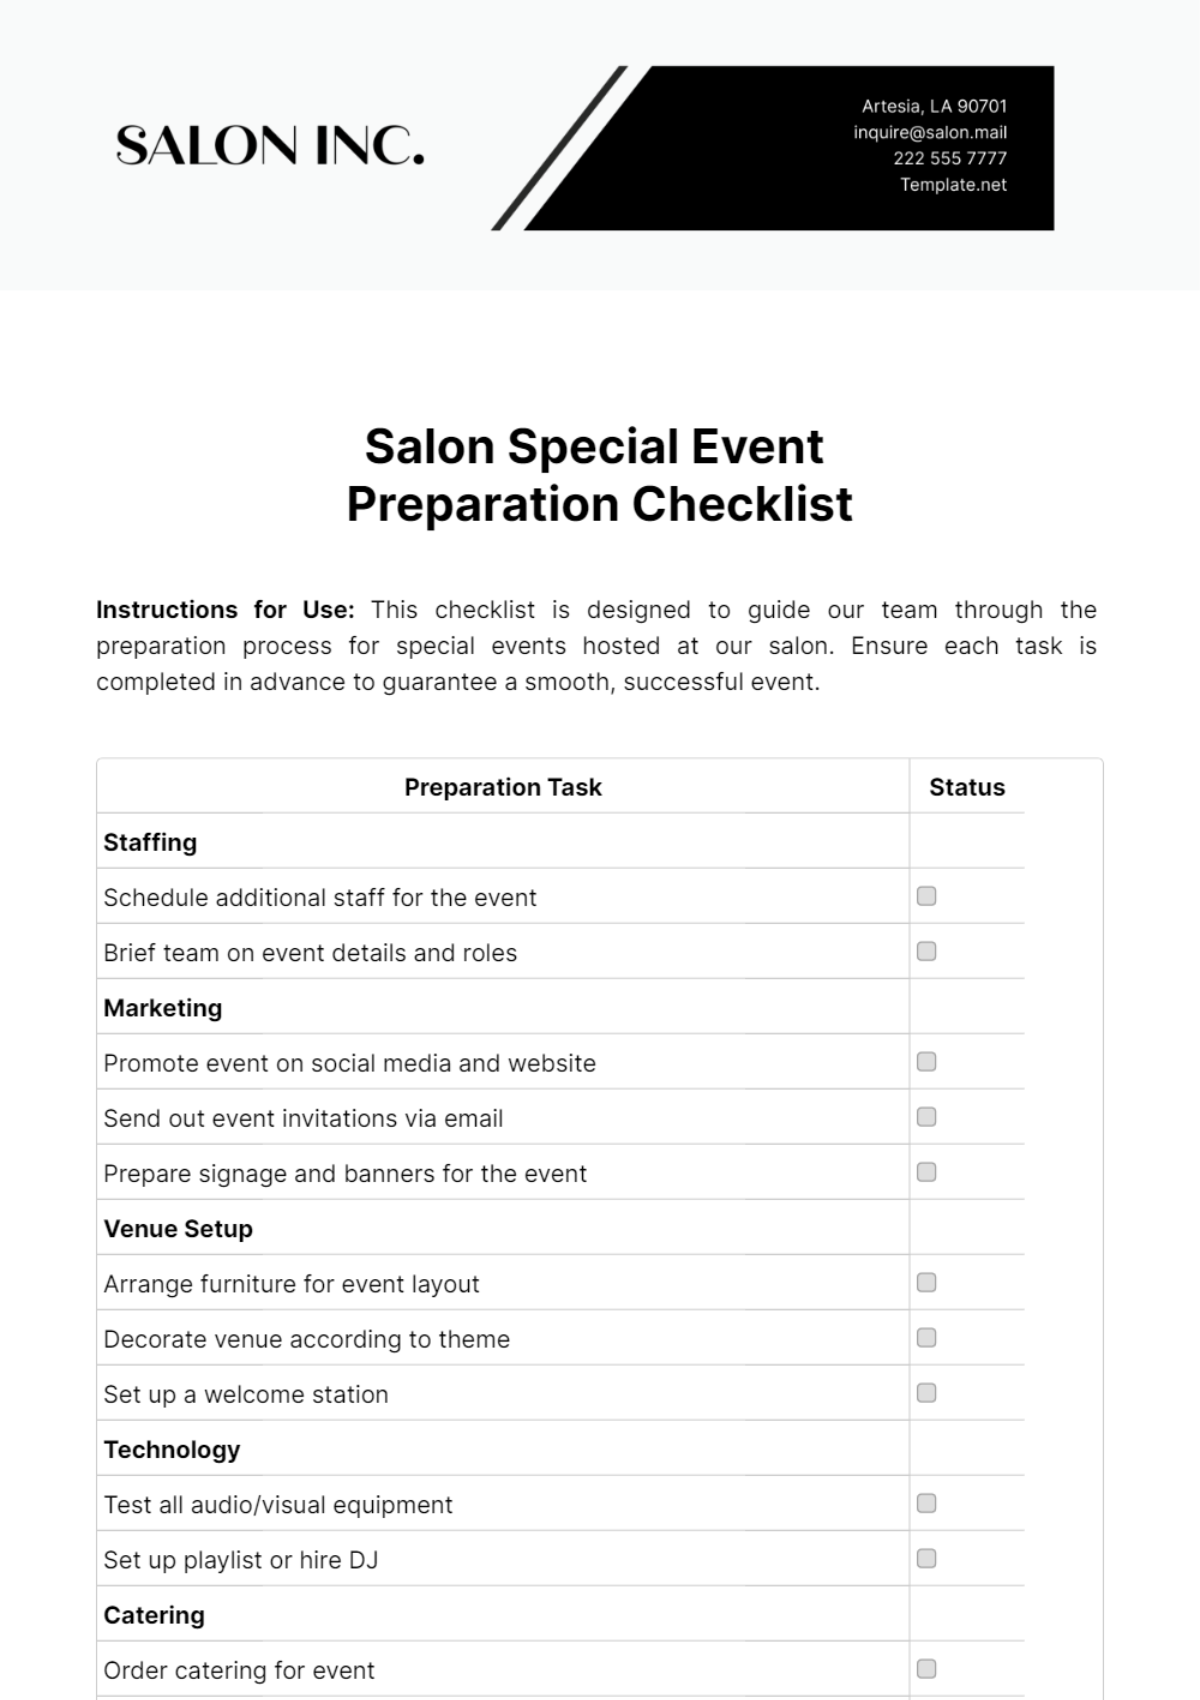 Salon Special Event Preparation Checklist Template